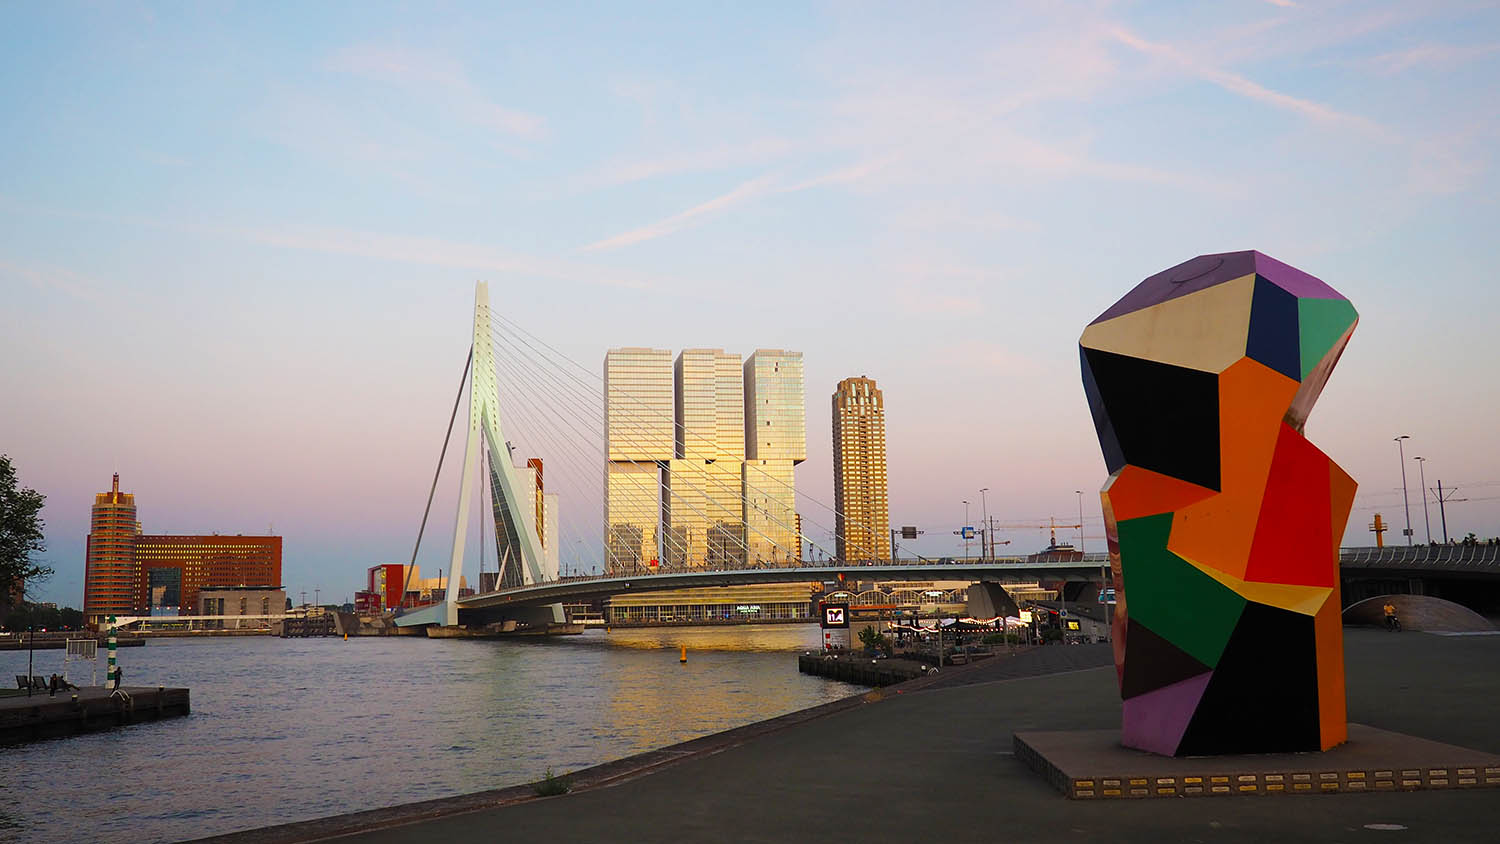 Rotterdam Sunset